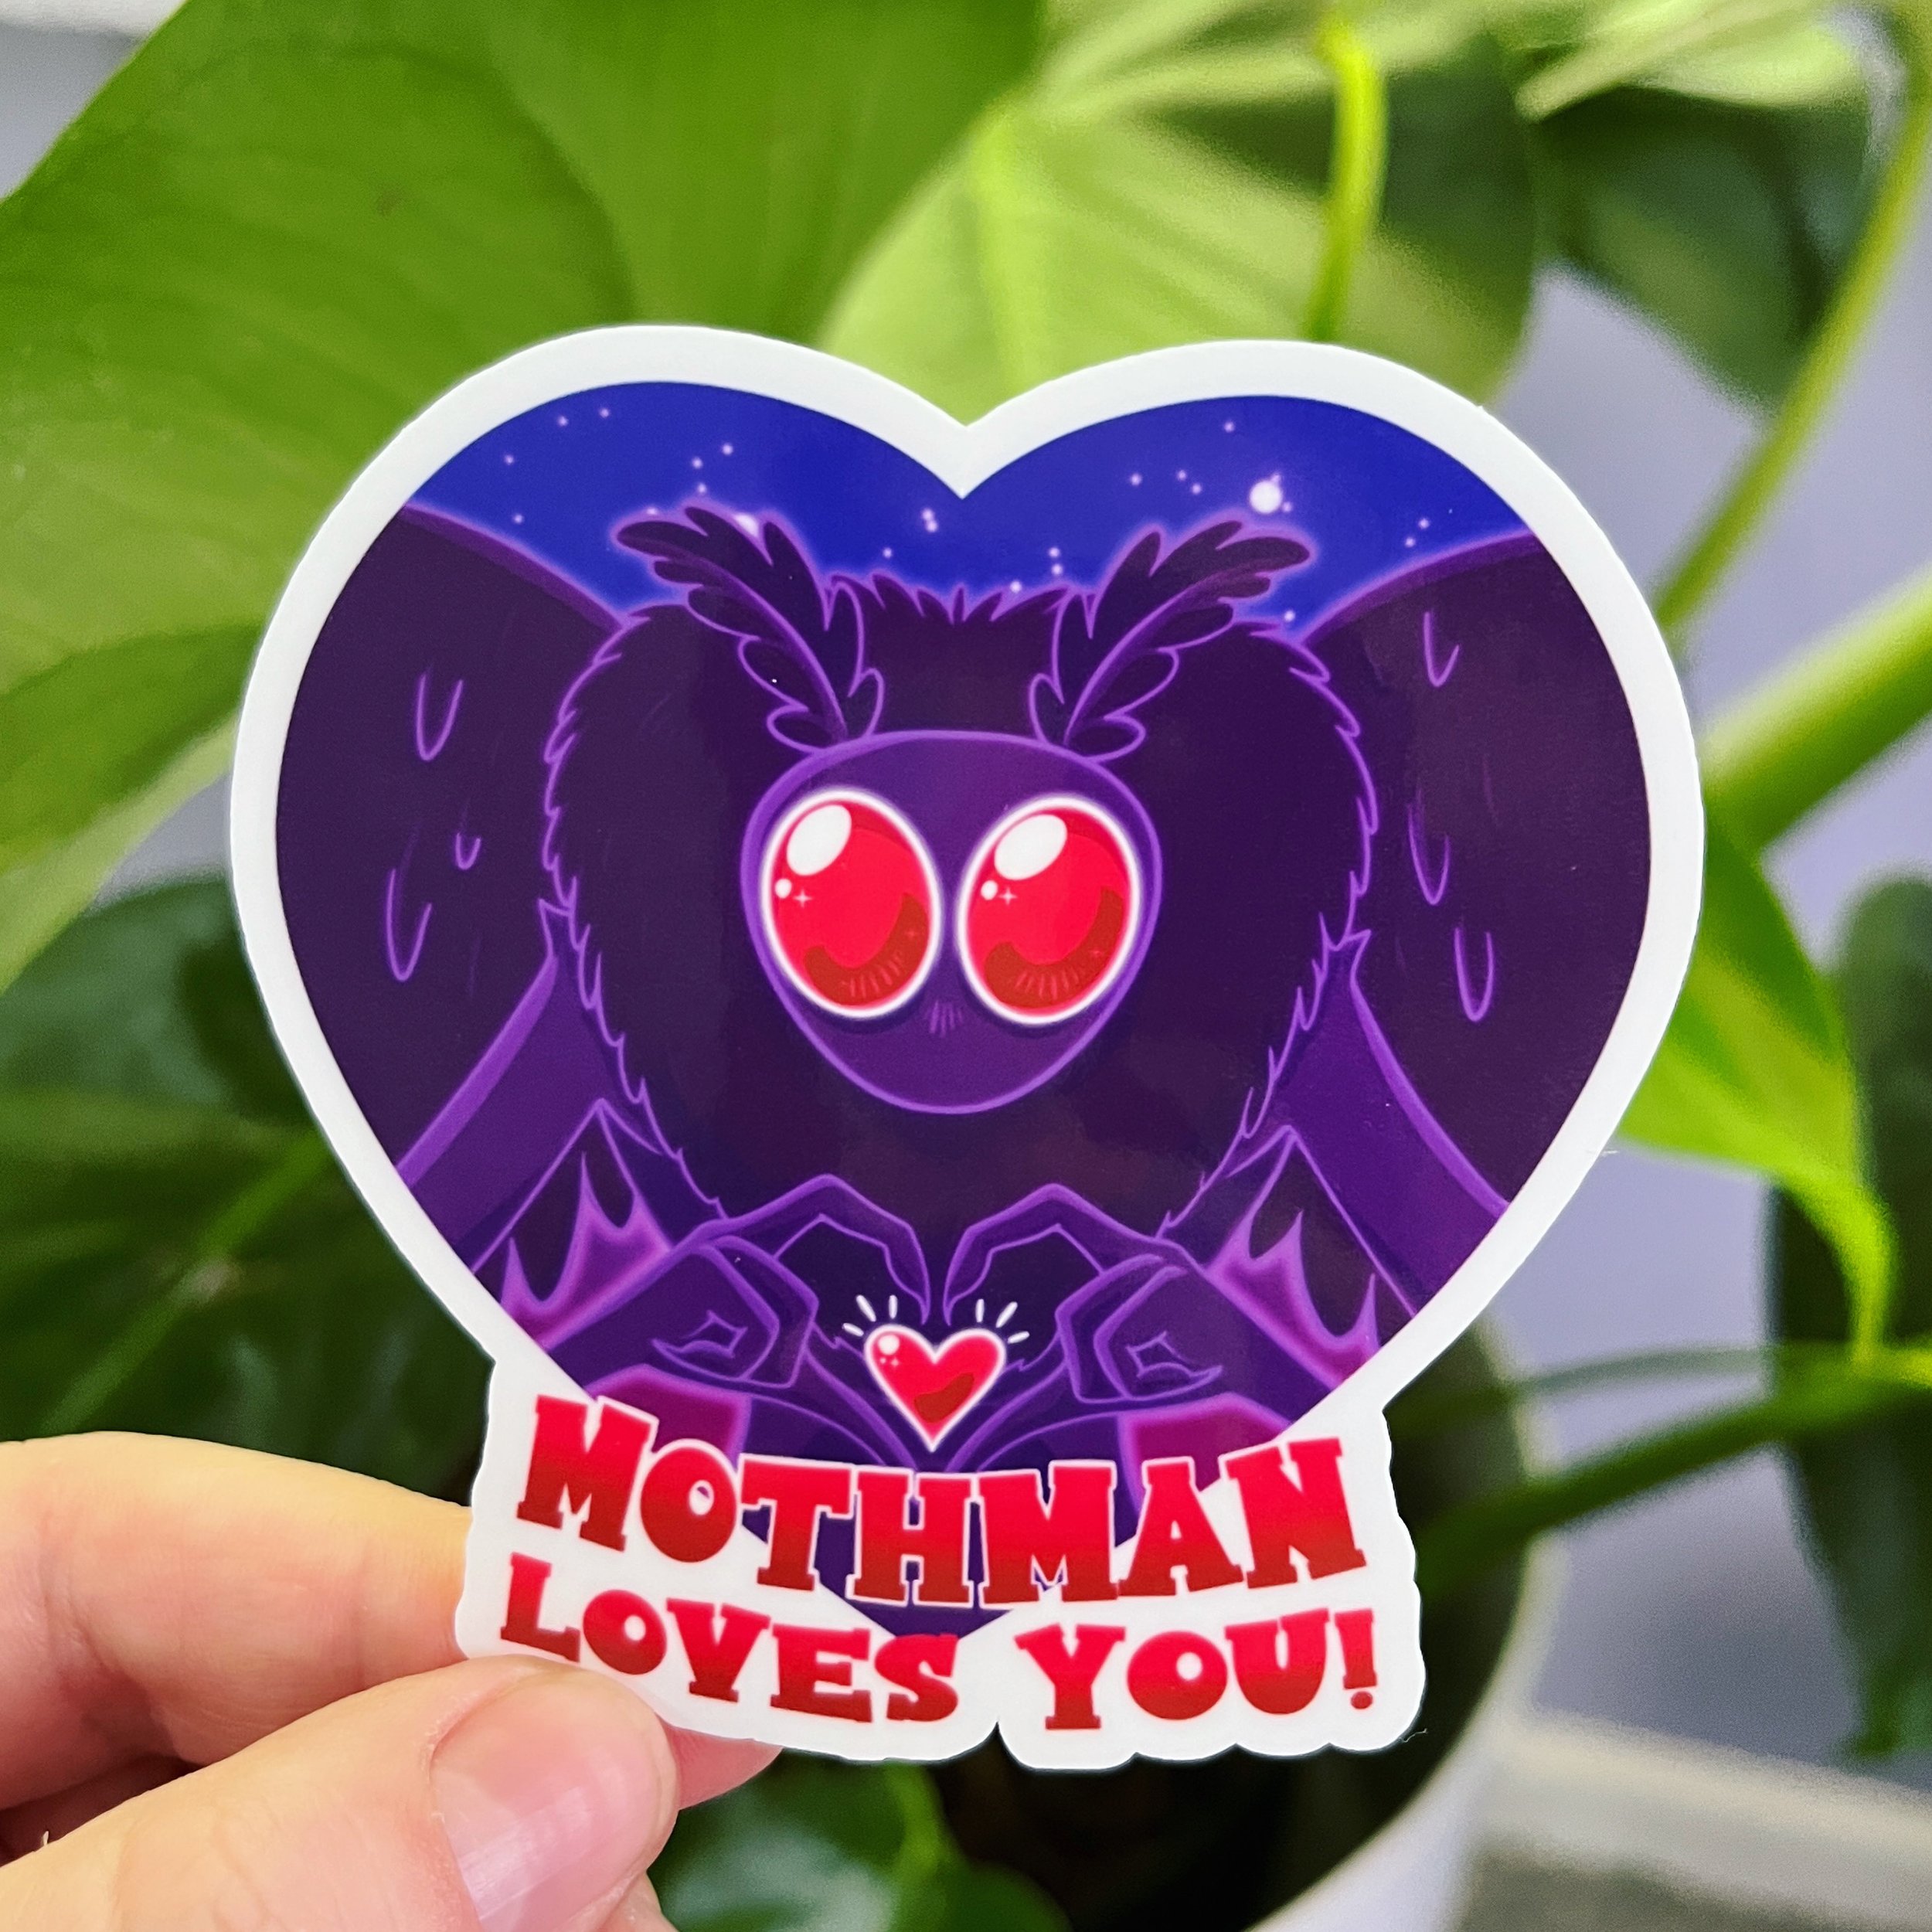 mothman loves you sticker.jpg